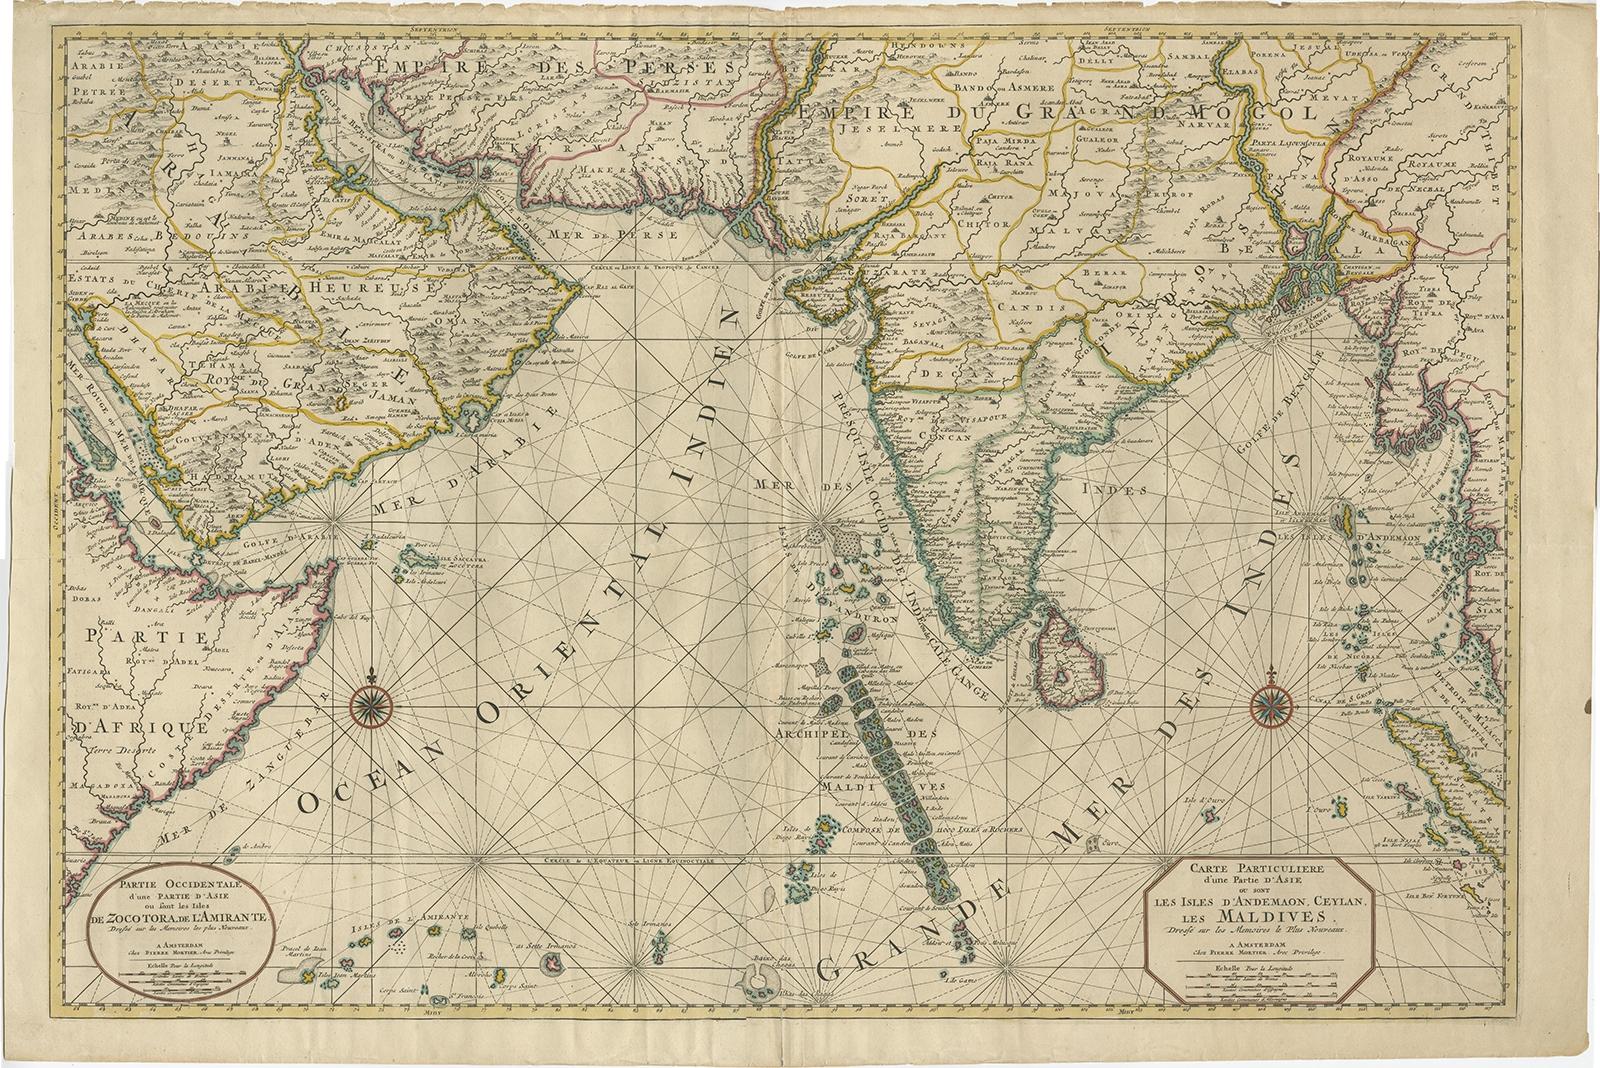 Stunning Old Map of Asia.

Description: Two-sheet map of Asia, joined. The left part of this antique map is titled 'Partie occidentale d'une partie d'Asie ou sont les Isles de Zocotora, de l'Amirante'. The right part of this antique map is titled